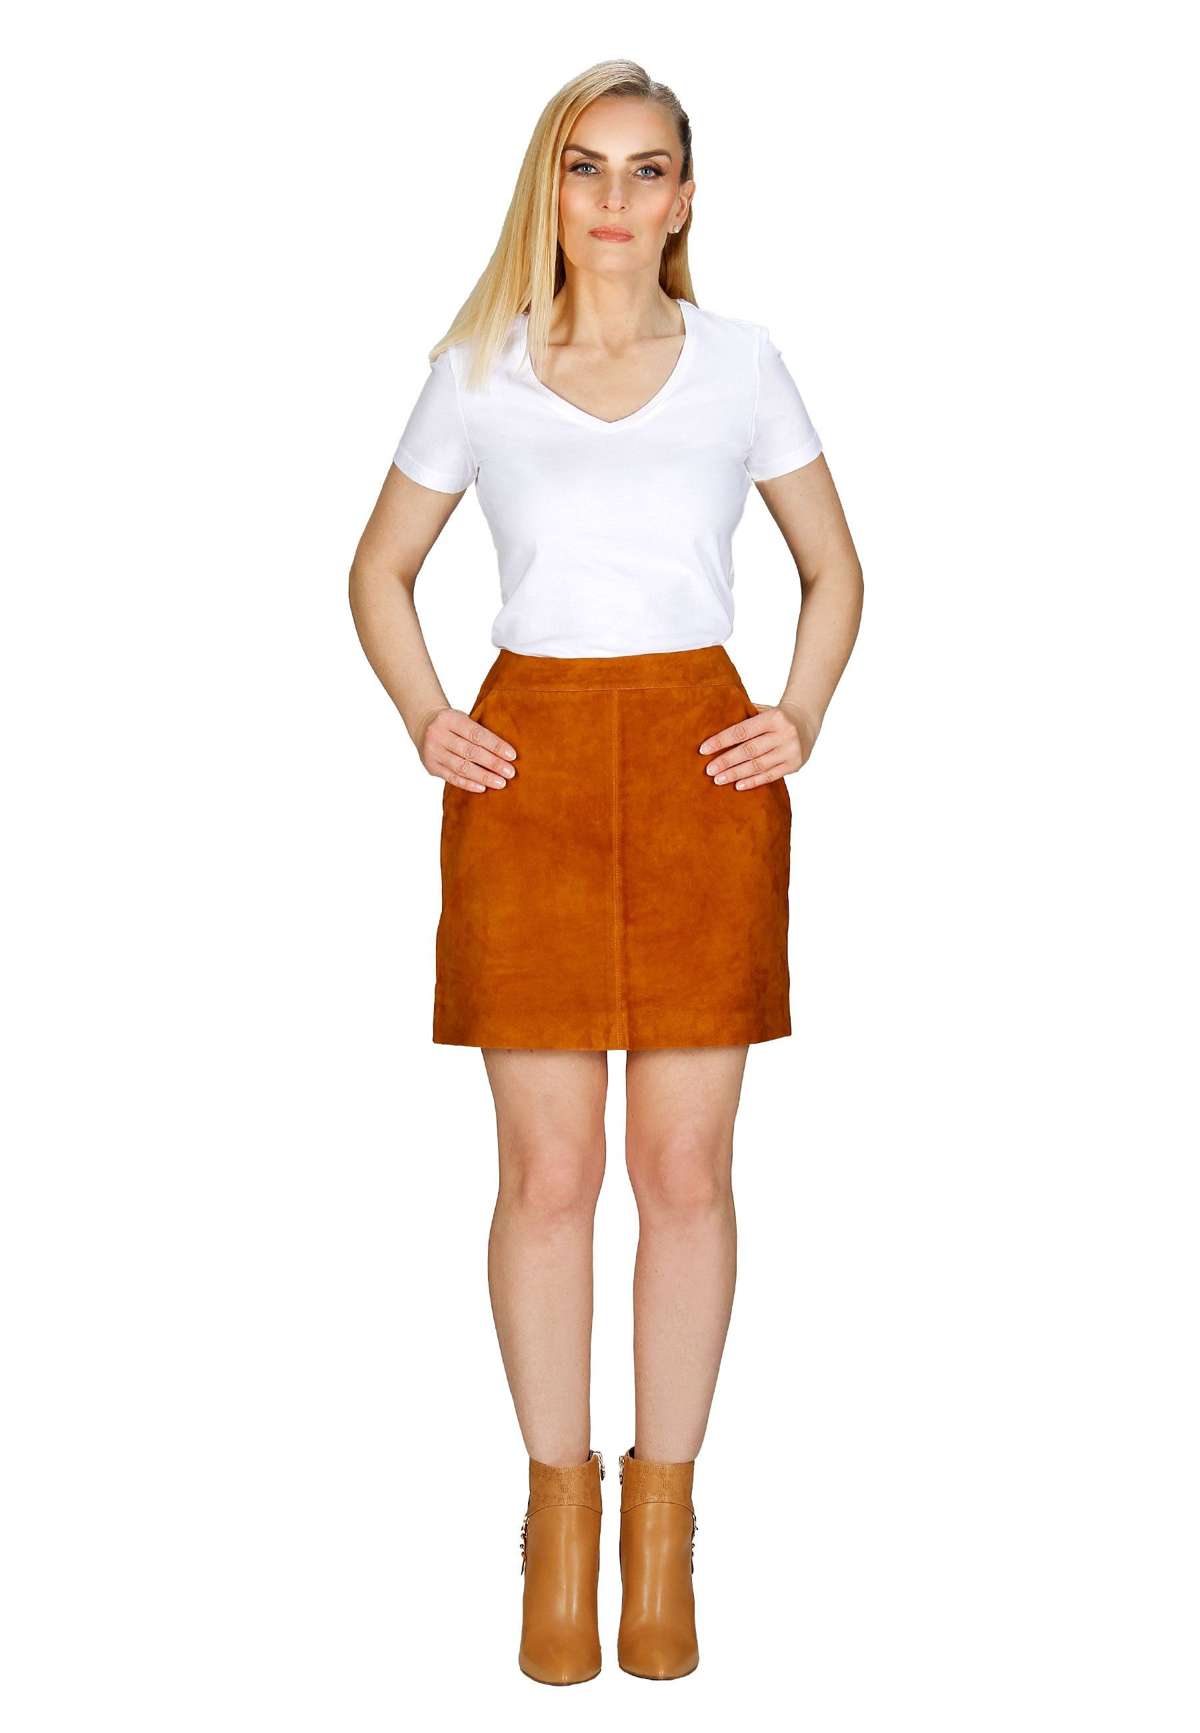 Кожаная юбка замшевая мини-юбка Selvaggio: Short